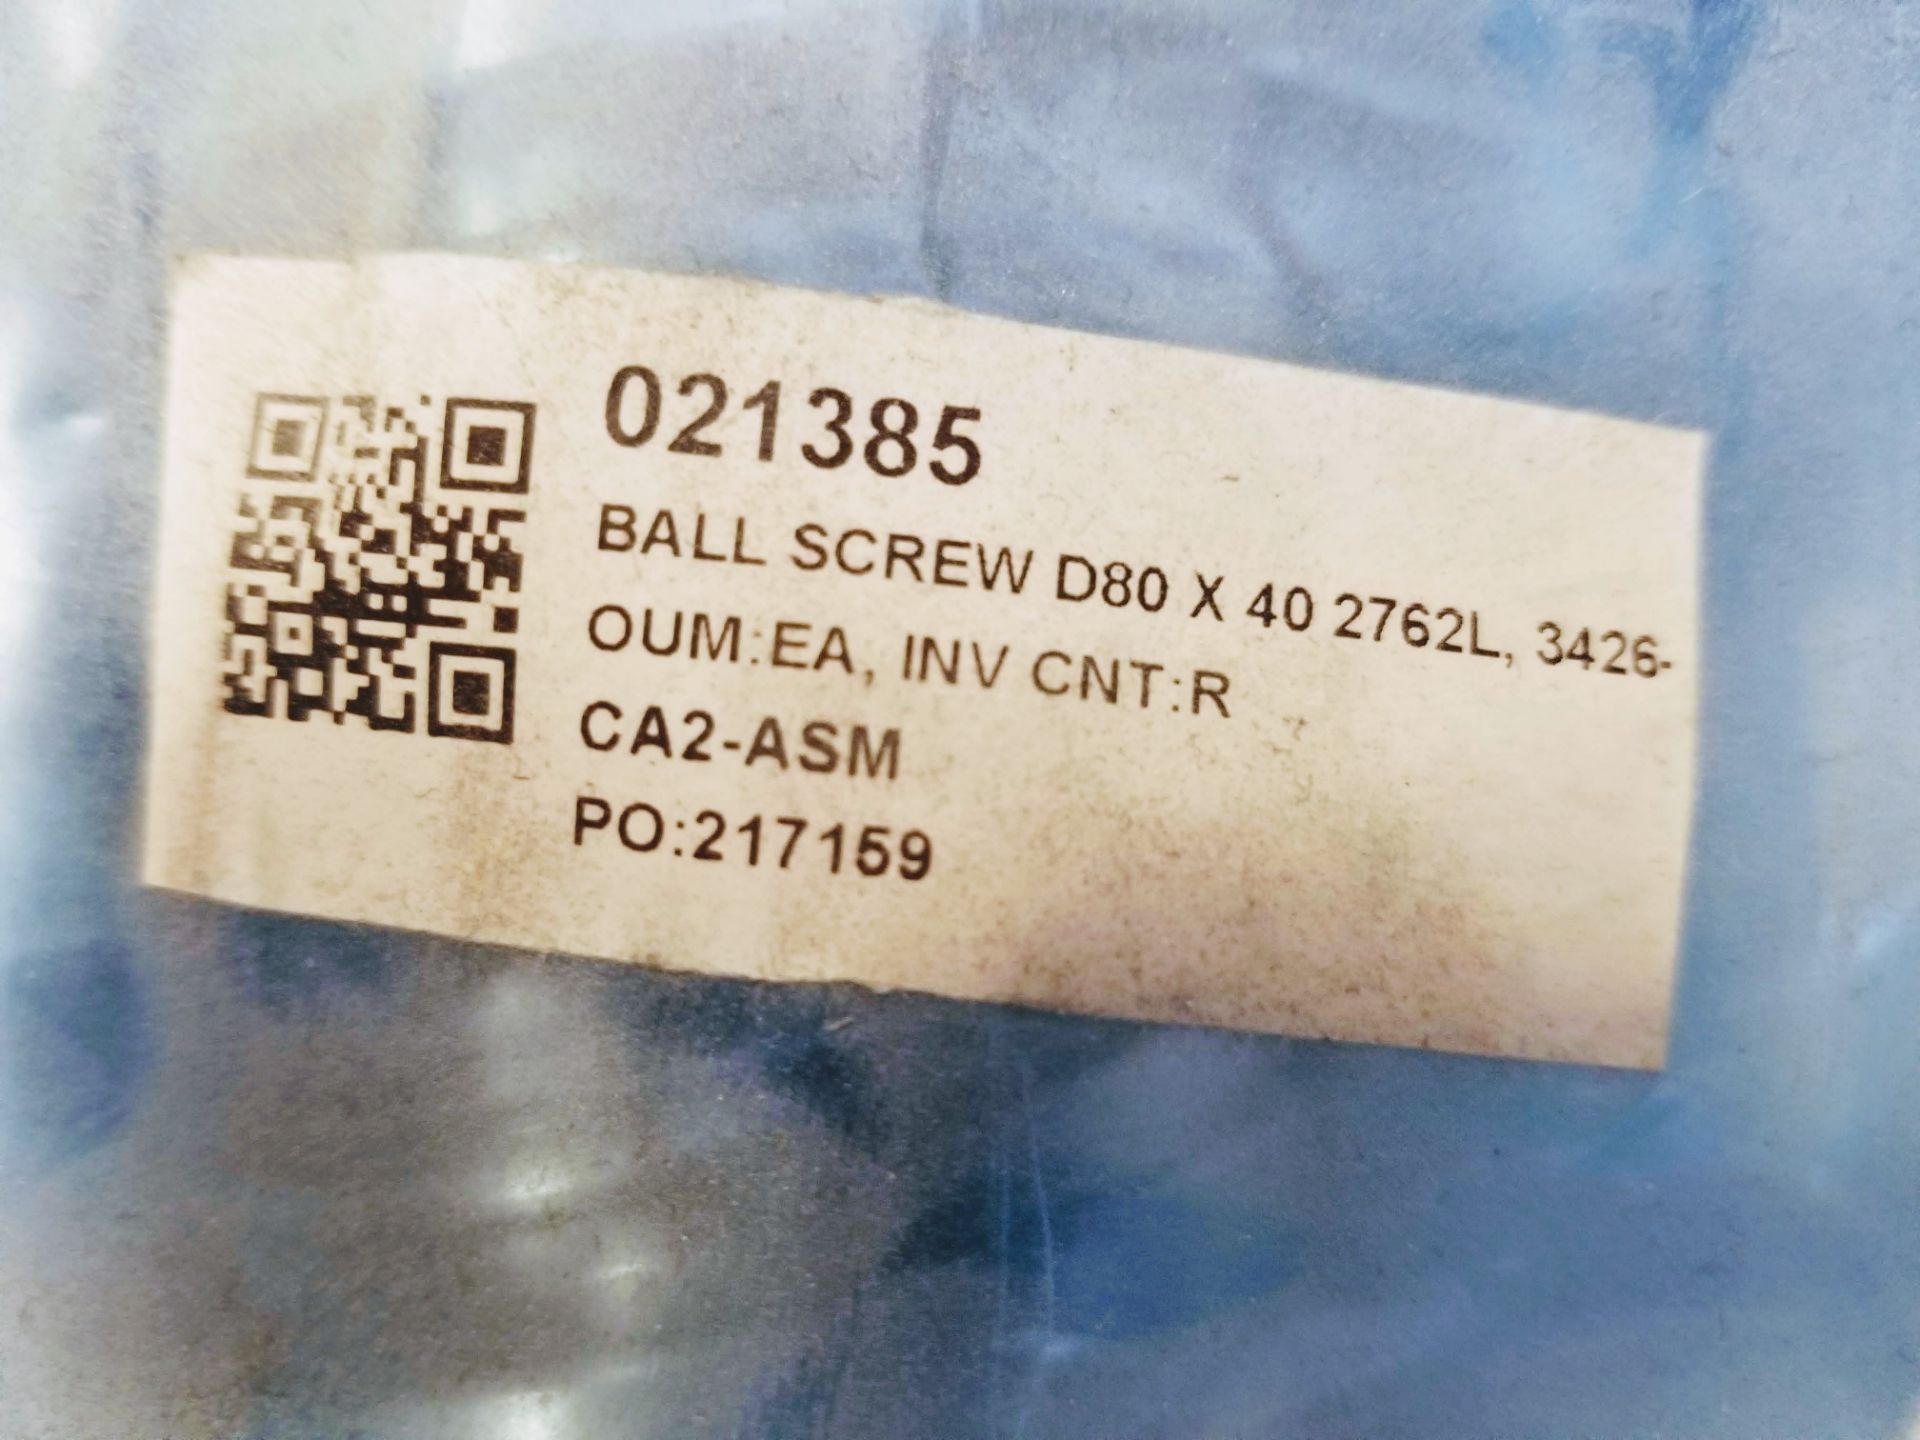 LOT - BALL SCREW D80 X 40 2762L, 3426-40.80.11.8 (4 PCS) - Image 3 of 3